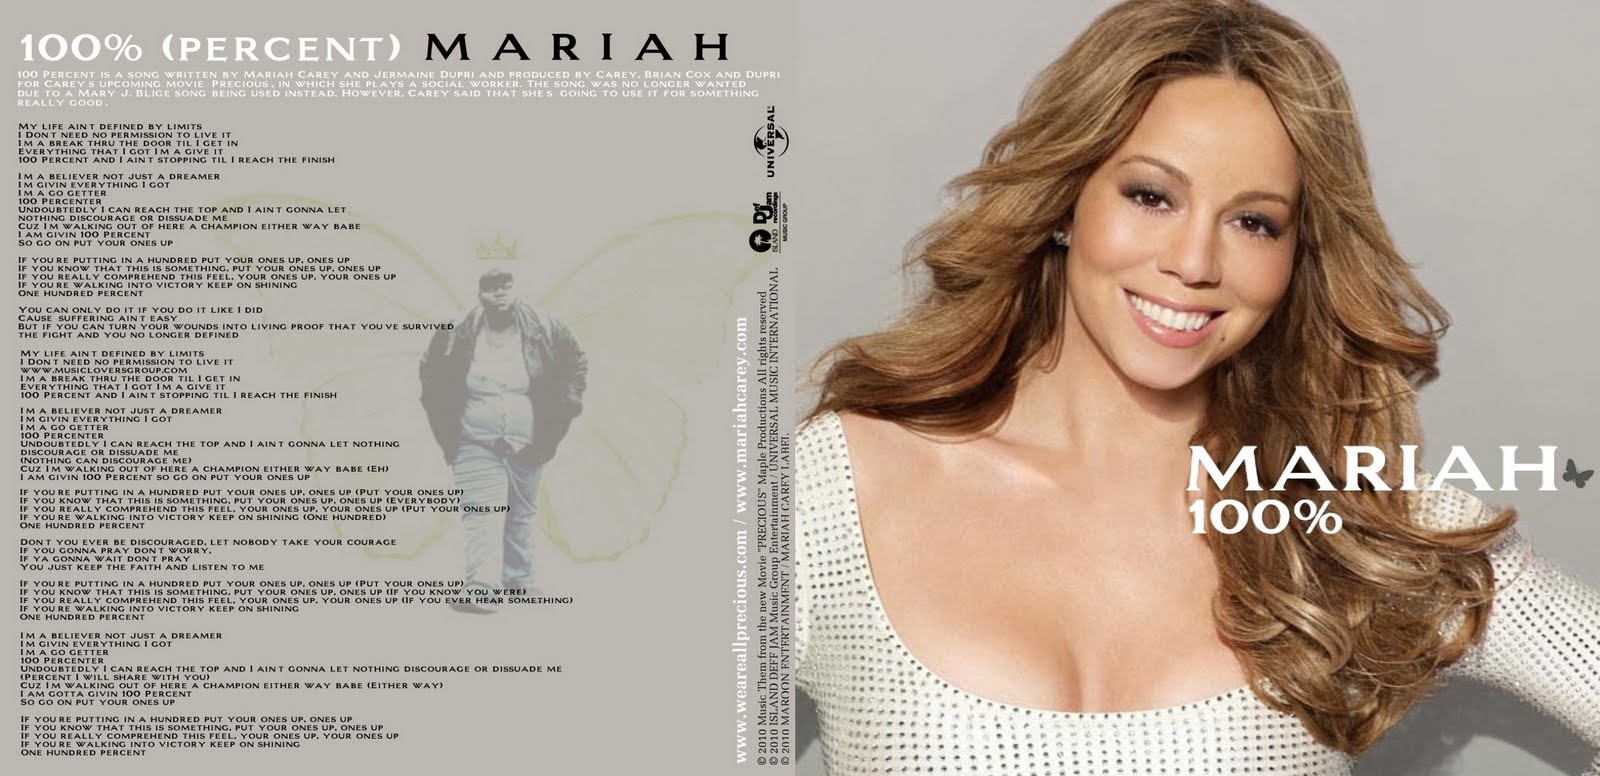 Mariah Carey - 100% " Visitem www.coversblog.com.br.